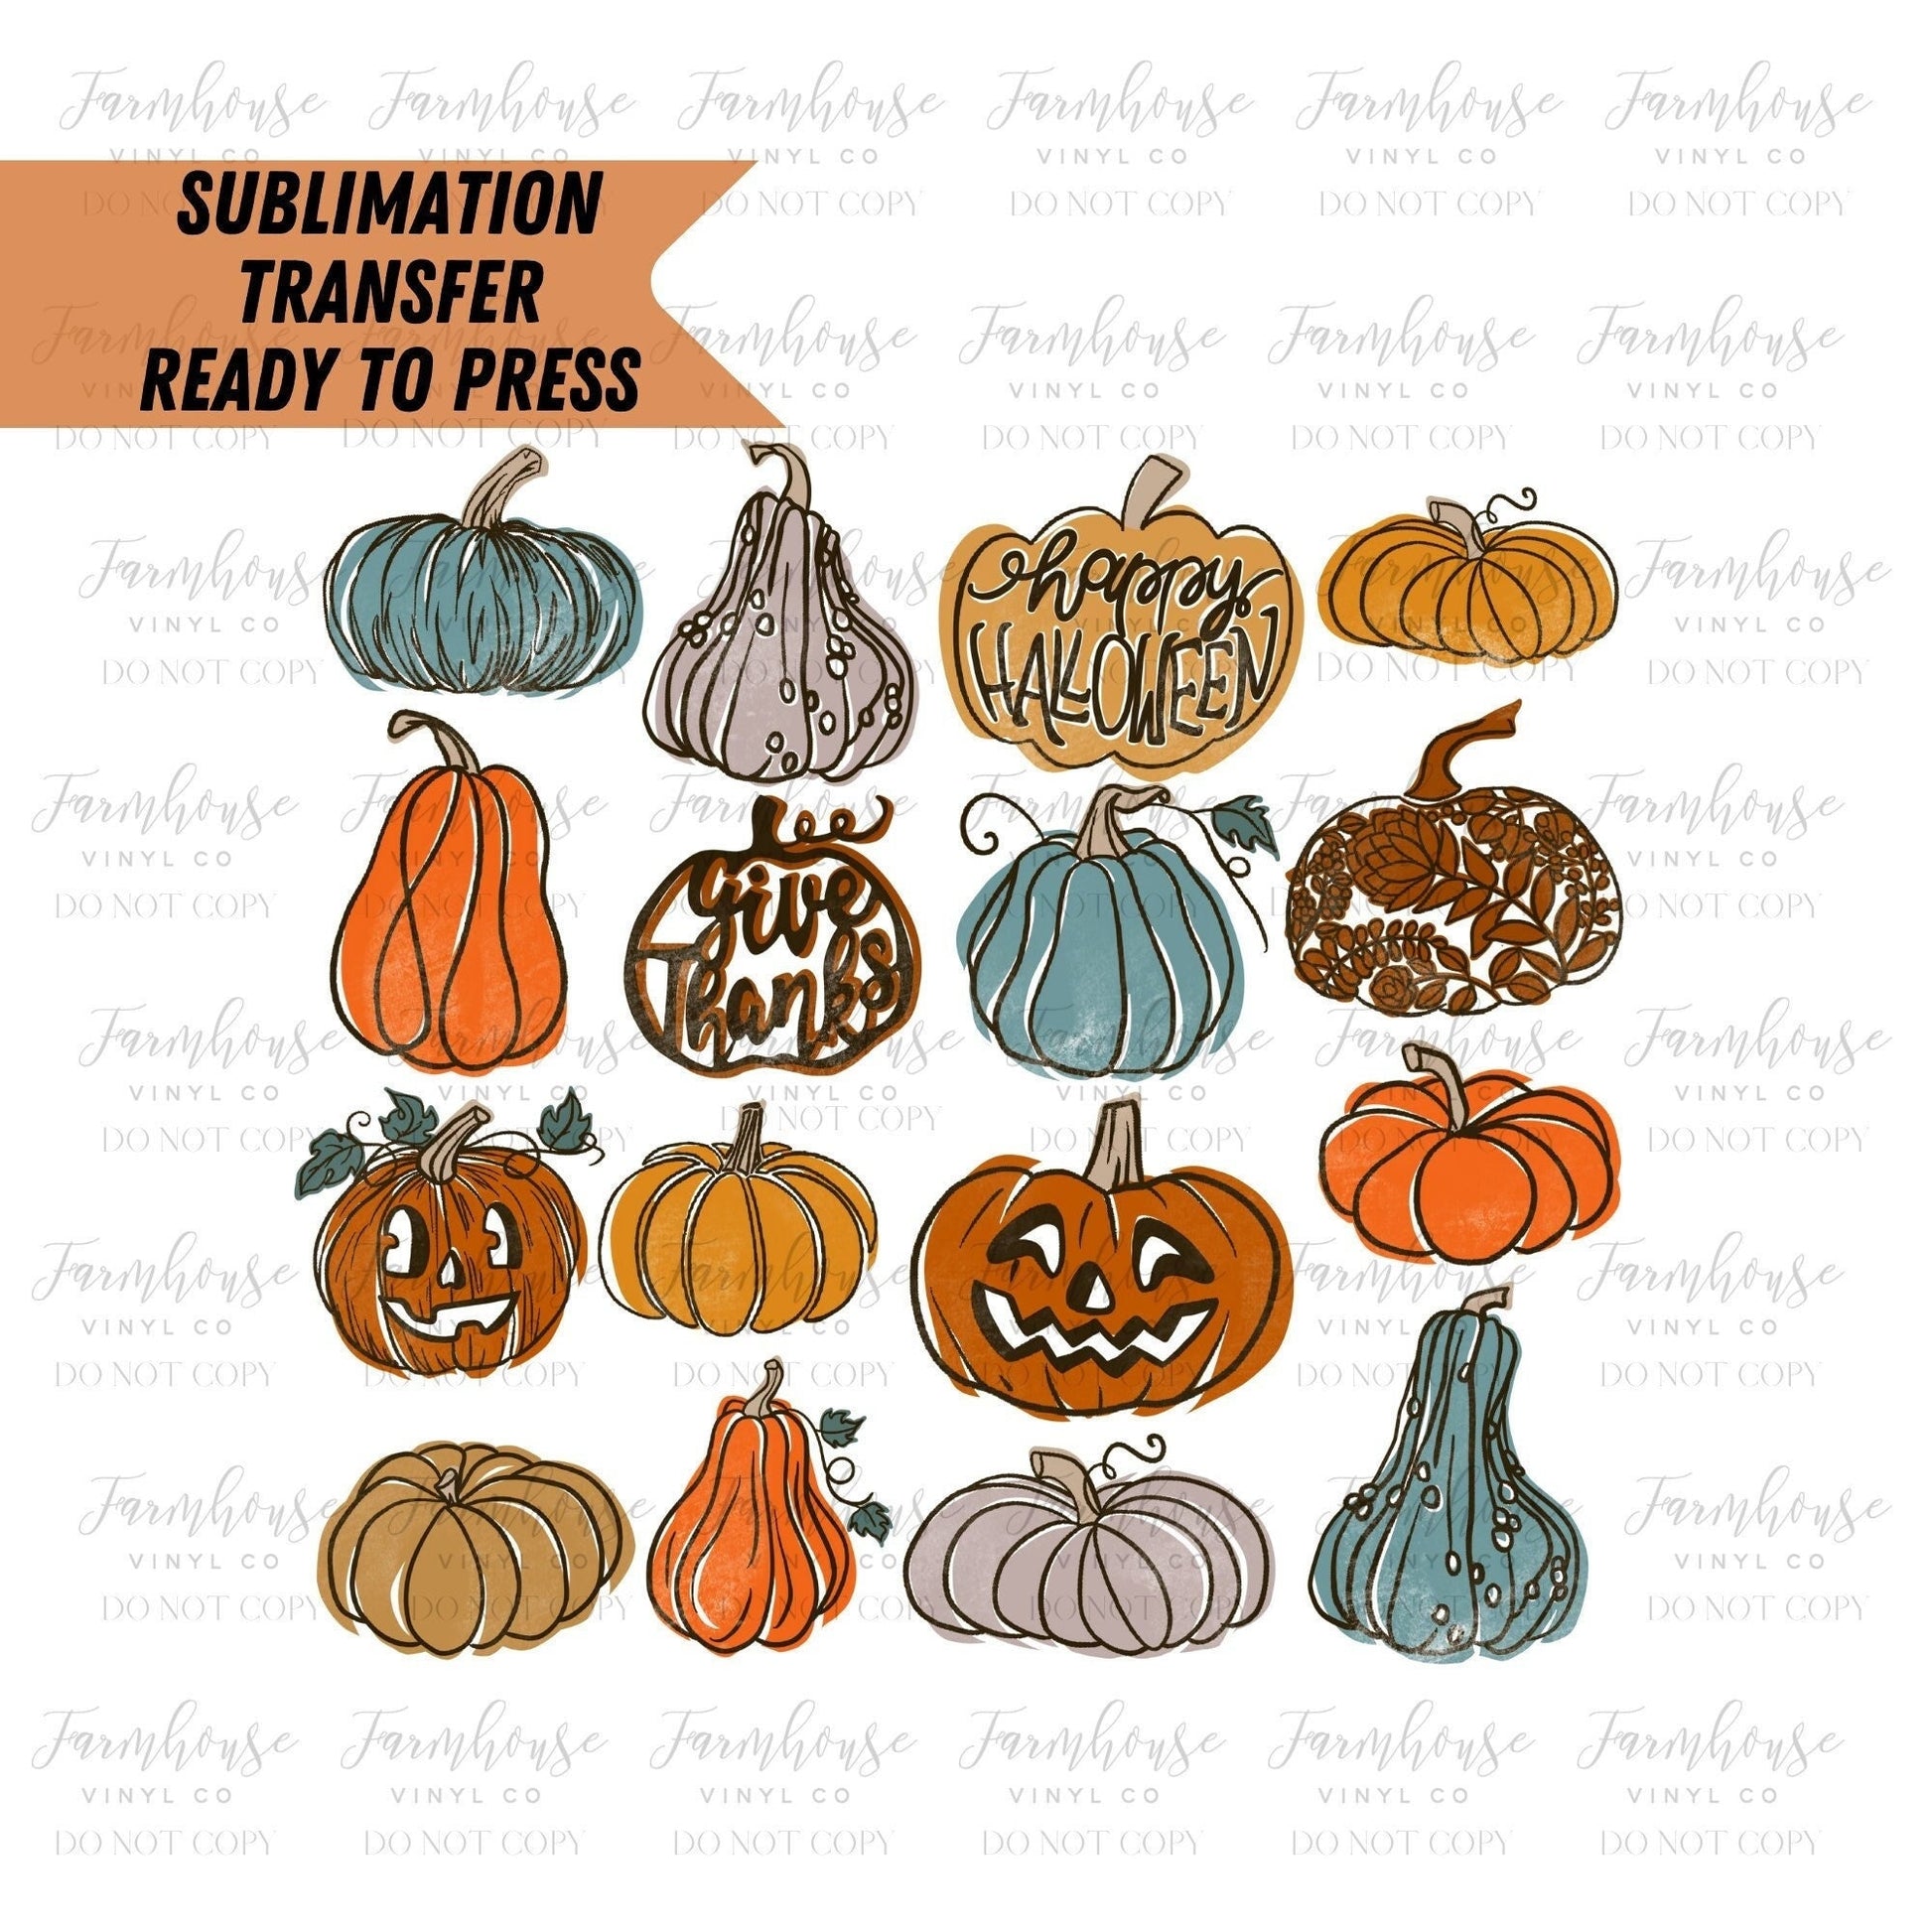 Fall Pumpkins Sublimation Design, Pumpkin Designs, Ready To Press, Sublimation, Transfer Ready Press, Halloween Fall Blessed Heat Transfer - Farmhouse Vinyl Co